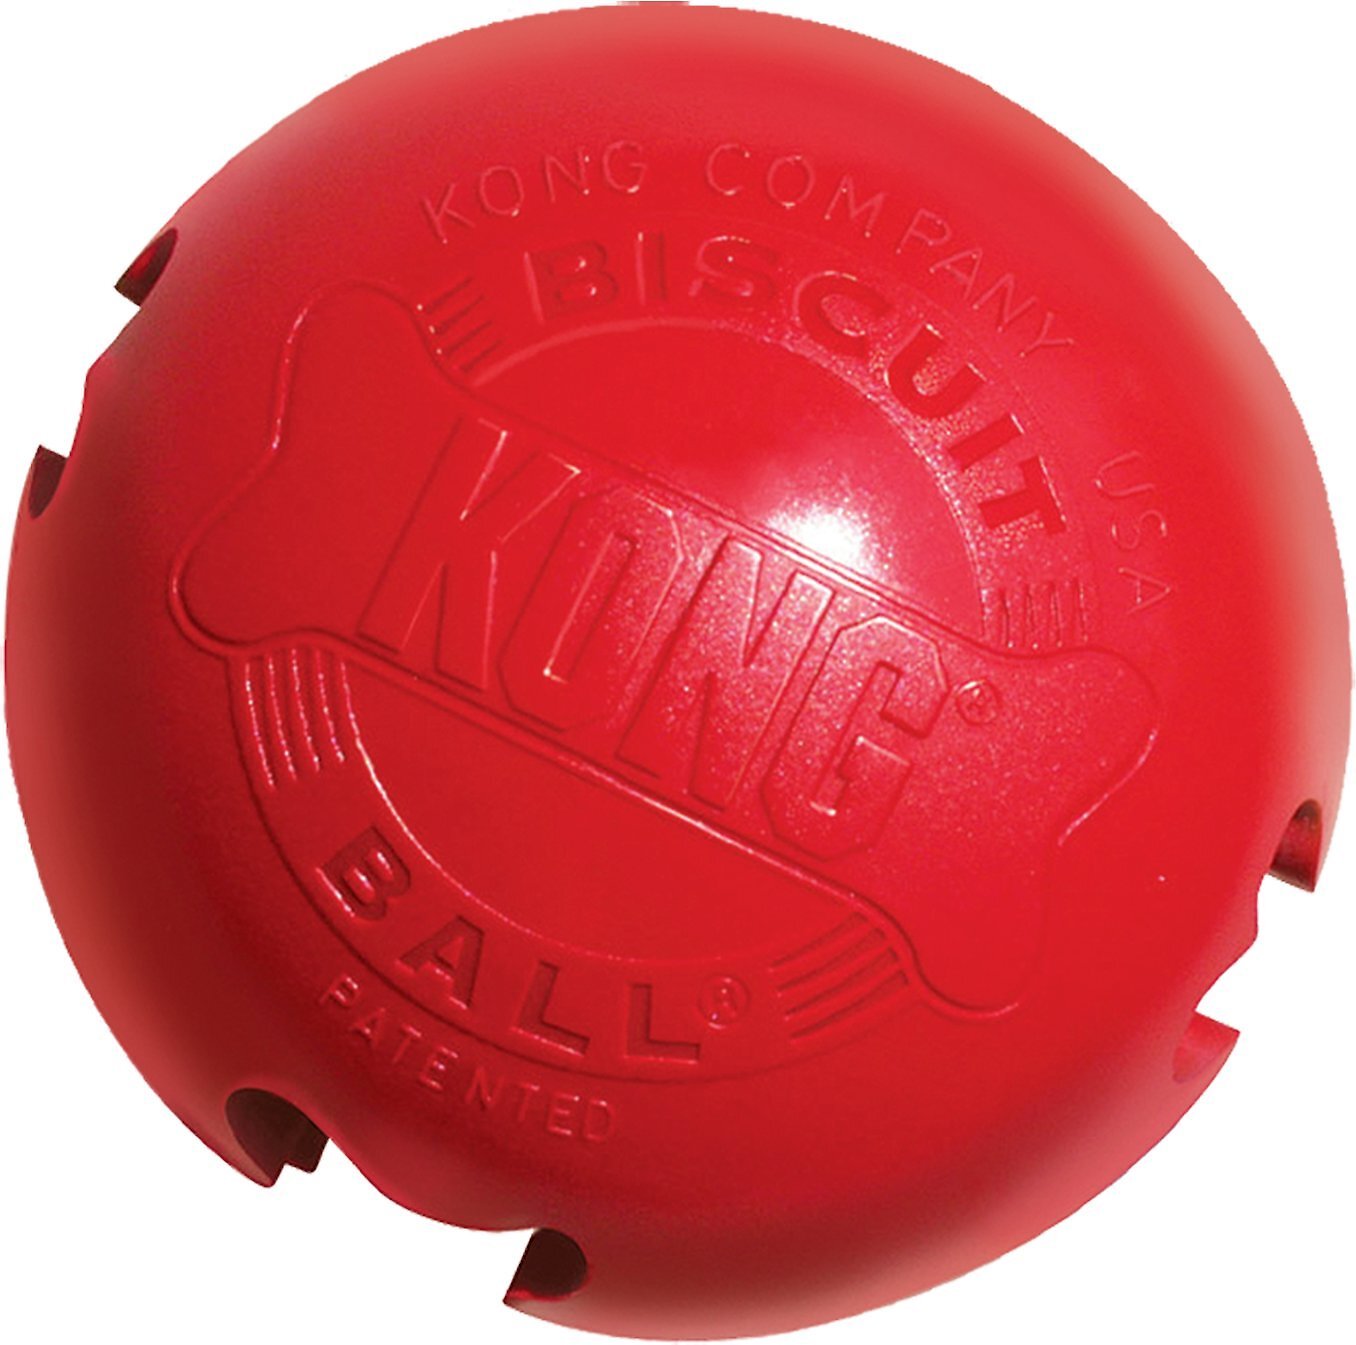 hollow dog ball